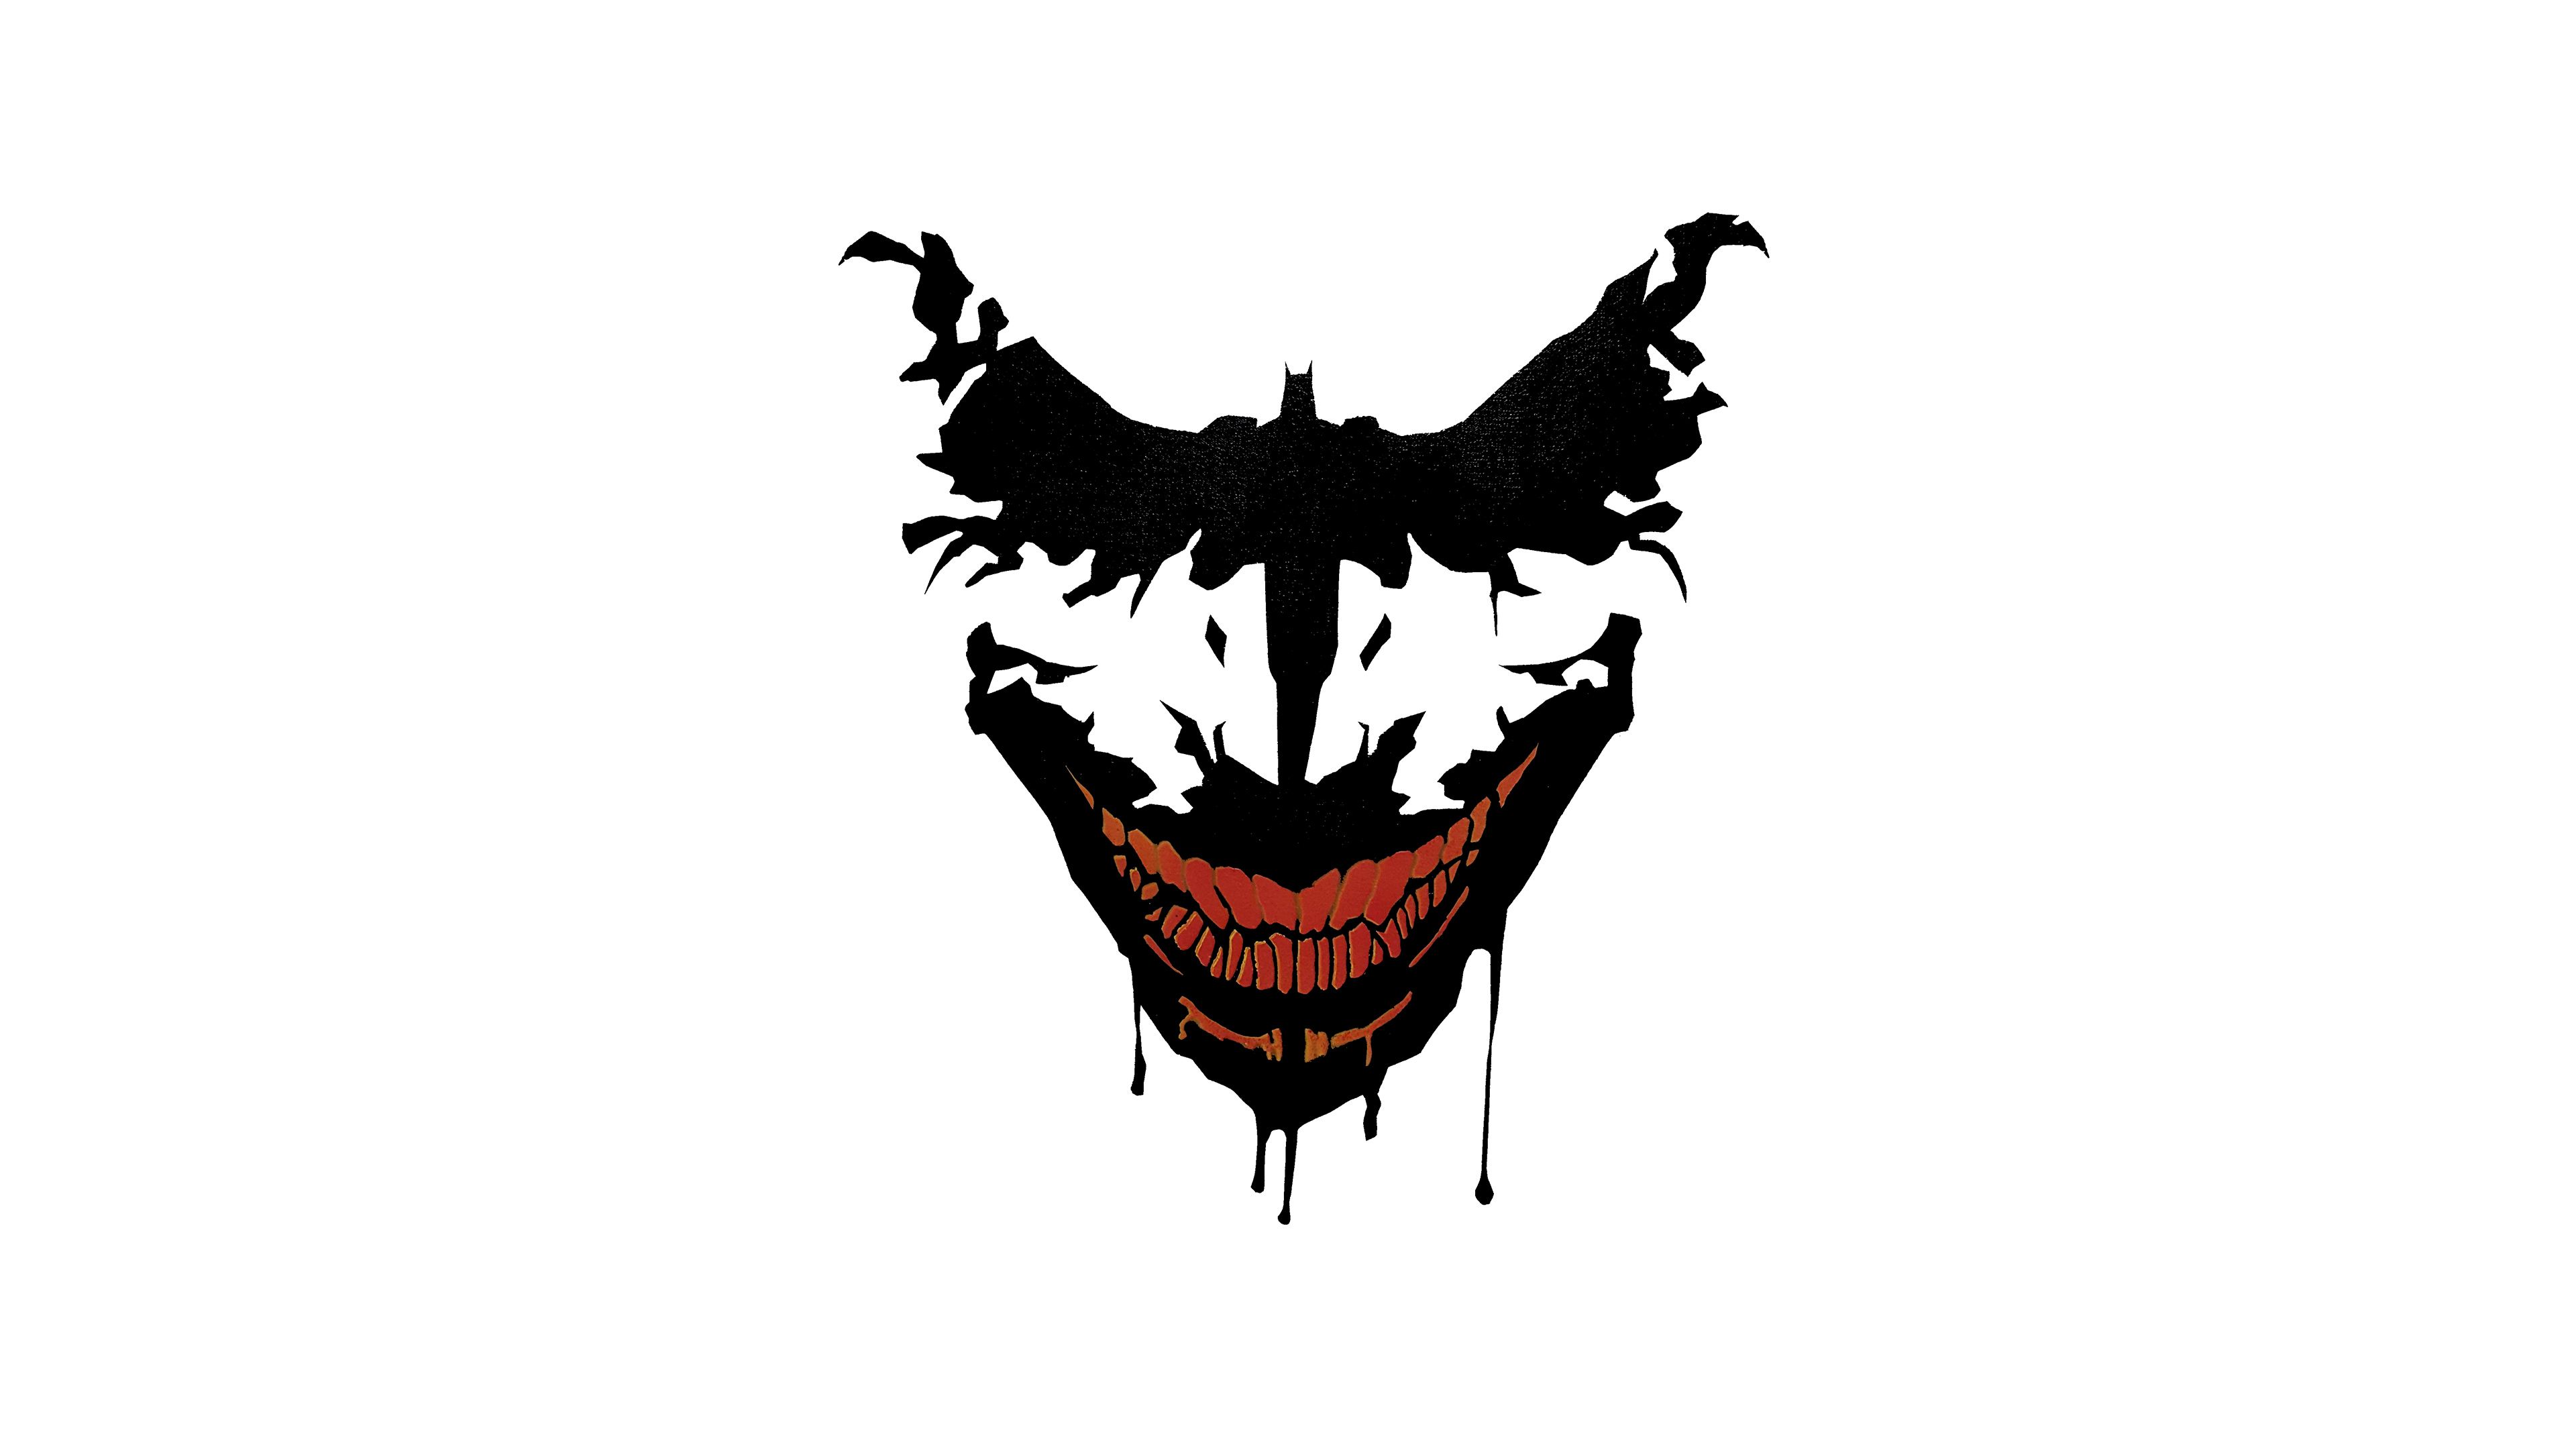 Joker Bat Art, HD Superheroes, 4k Fondos de pantalla, Imágenes, Fondos